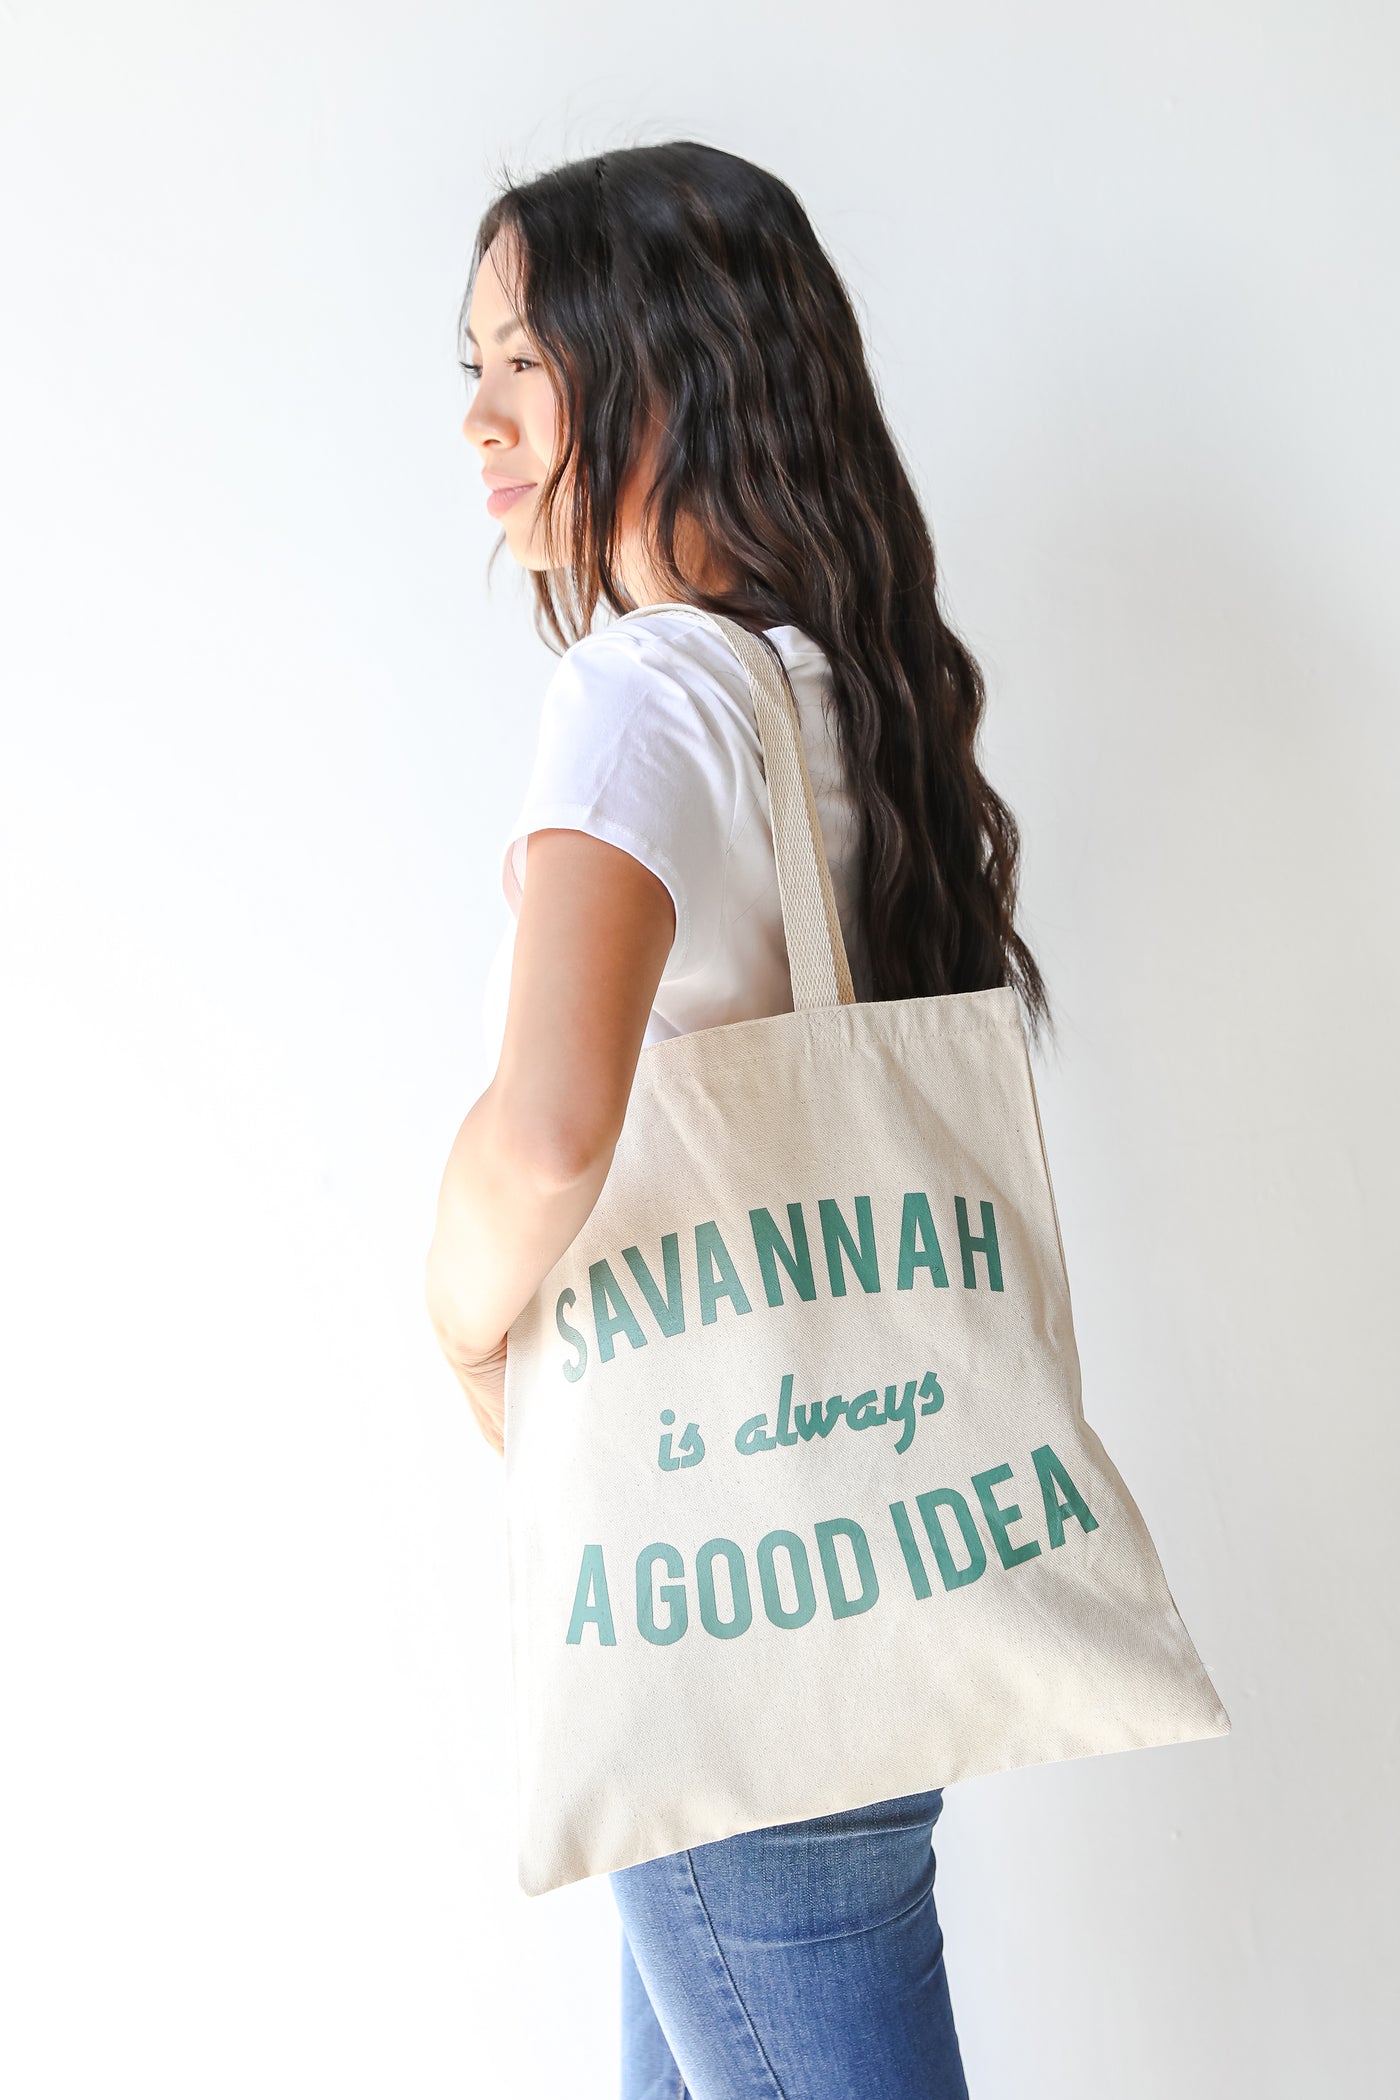 Savannah Is Always A Good Idea Tote Bag on model